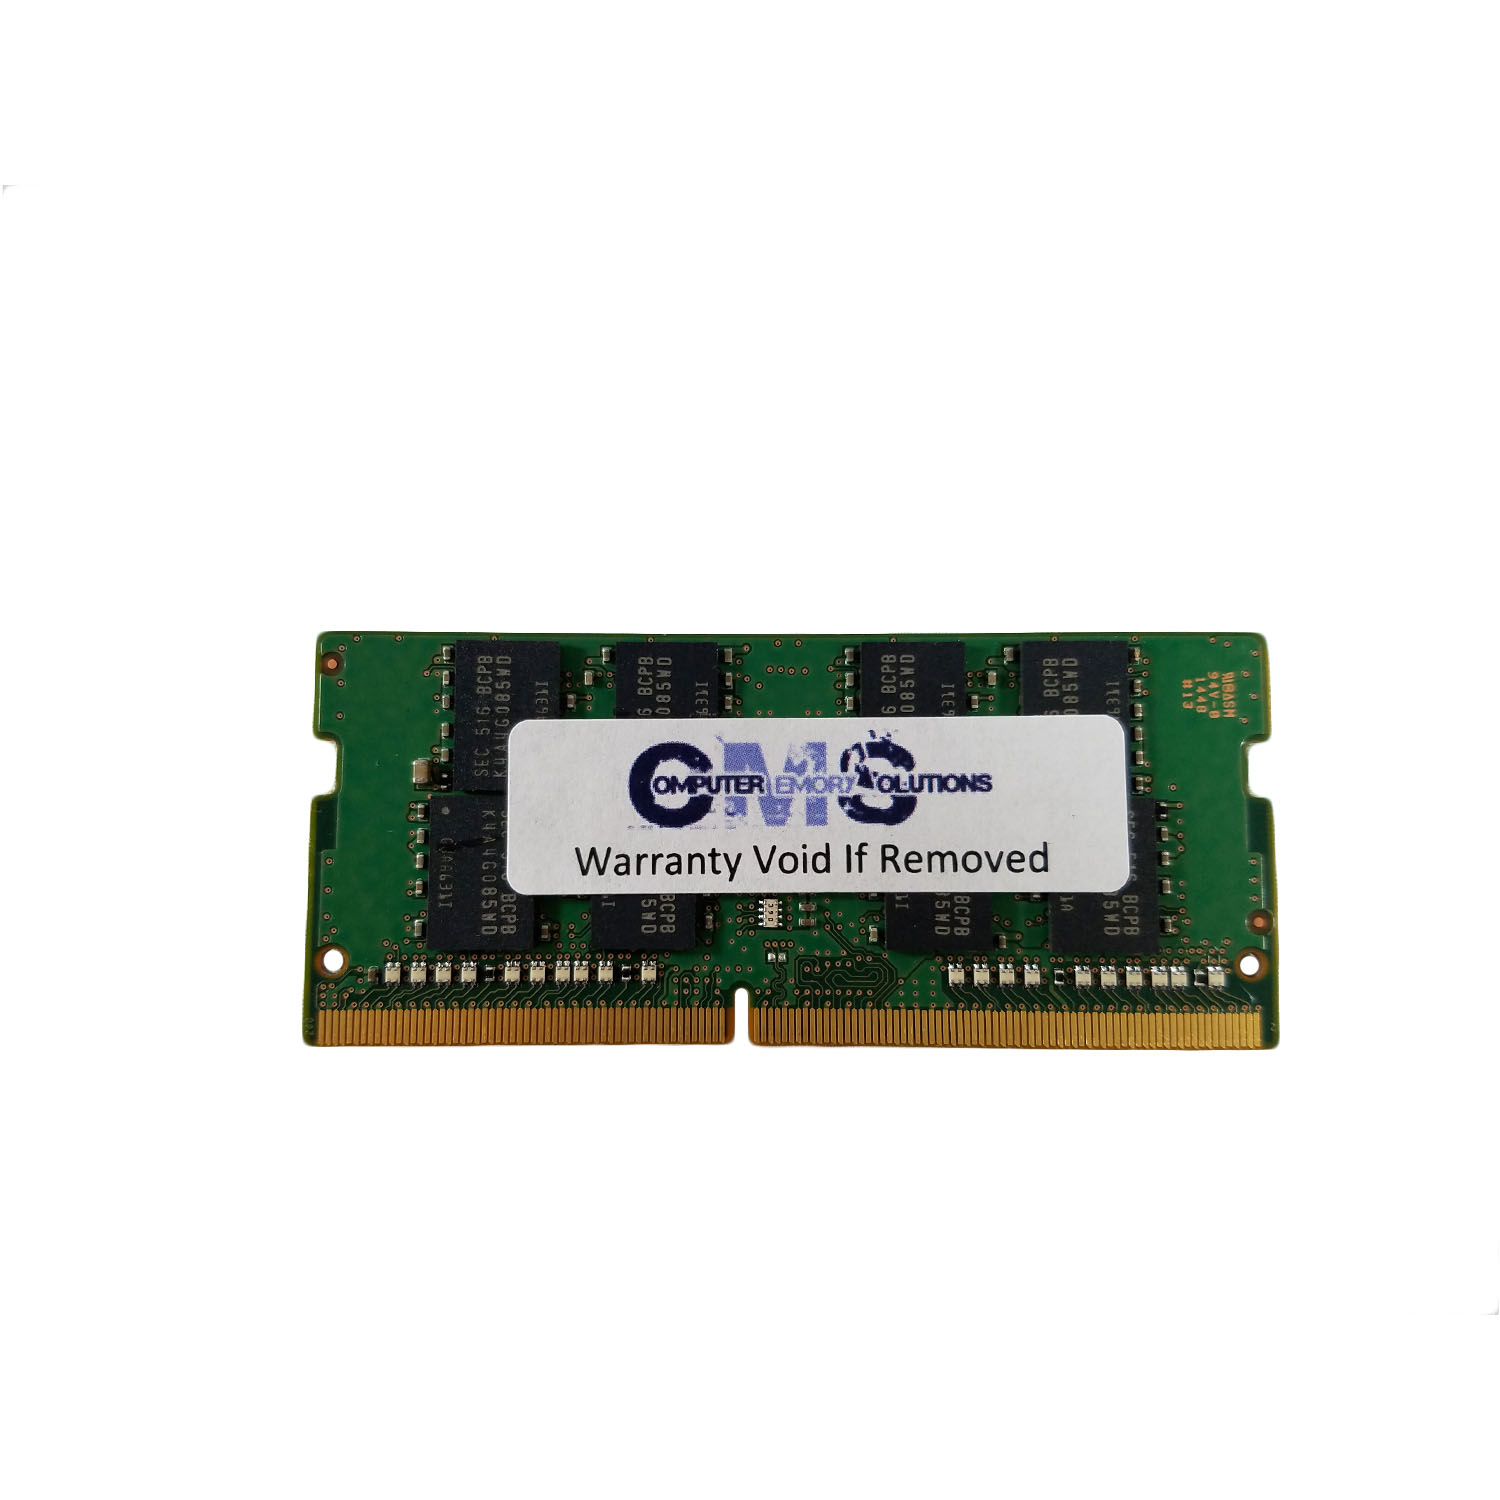 CMS 8GB (1X8GB) DDR4 19200 2400MHZ Non ECC SODIMM Memory Ram Upgrade Compatible with Lenovo® IdeaPad S340-14IML (14) Series, Yoga 510-14AST, Yoga 510-14IKB, Yoga 510-14ISK - C106 - image 1 of 3